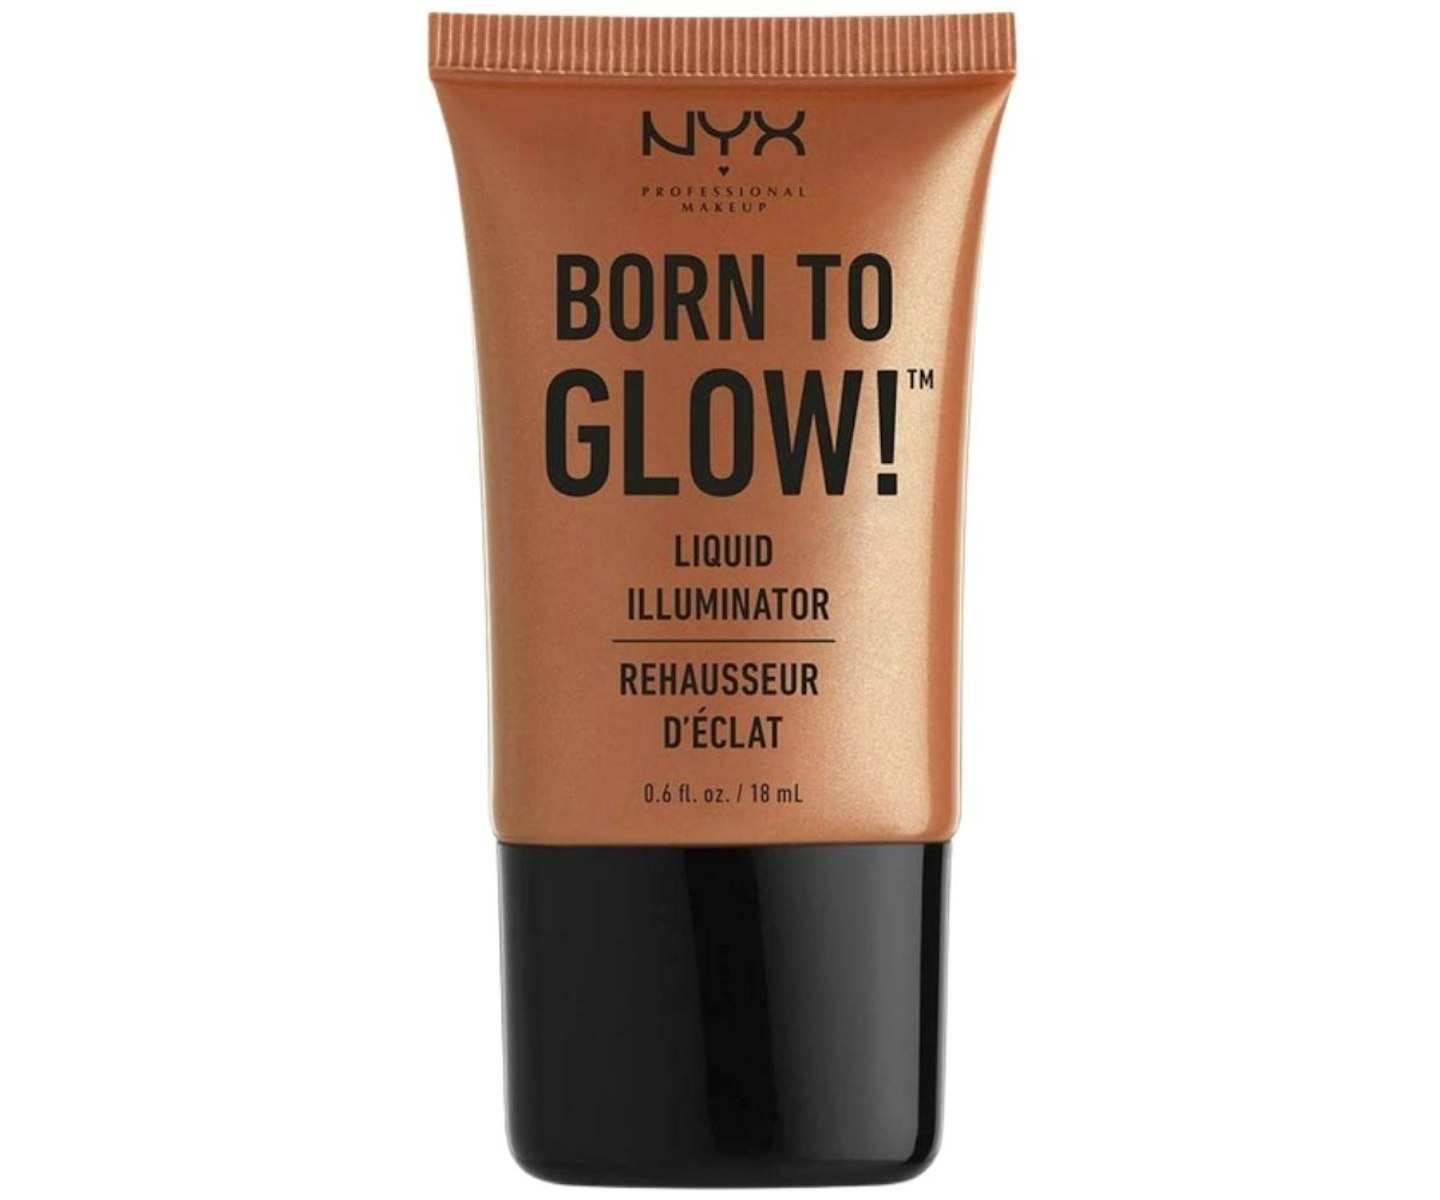 A picture of the NYX Born To Glow Liquid Illuminator